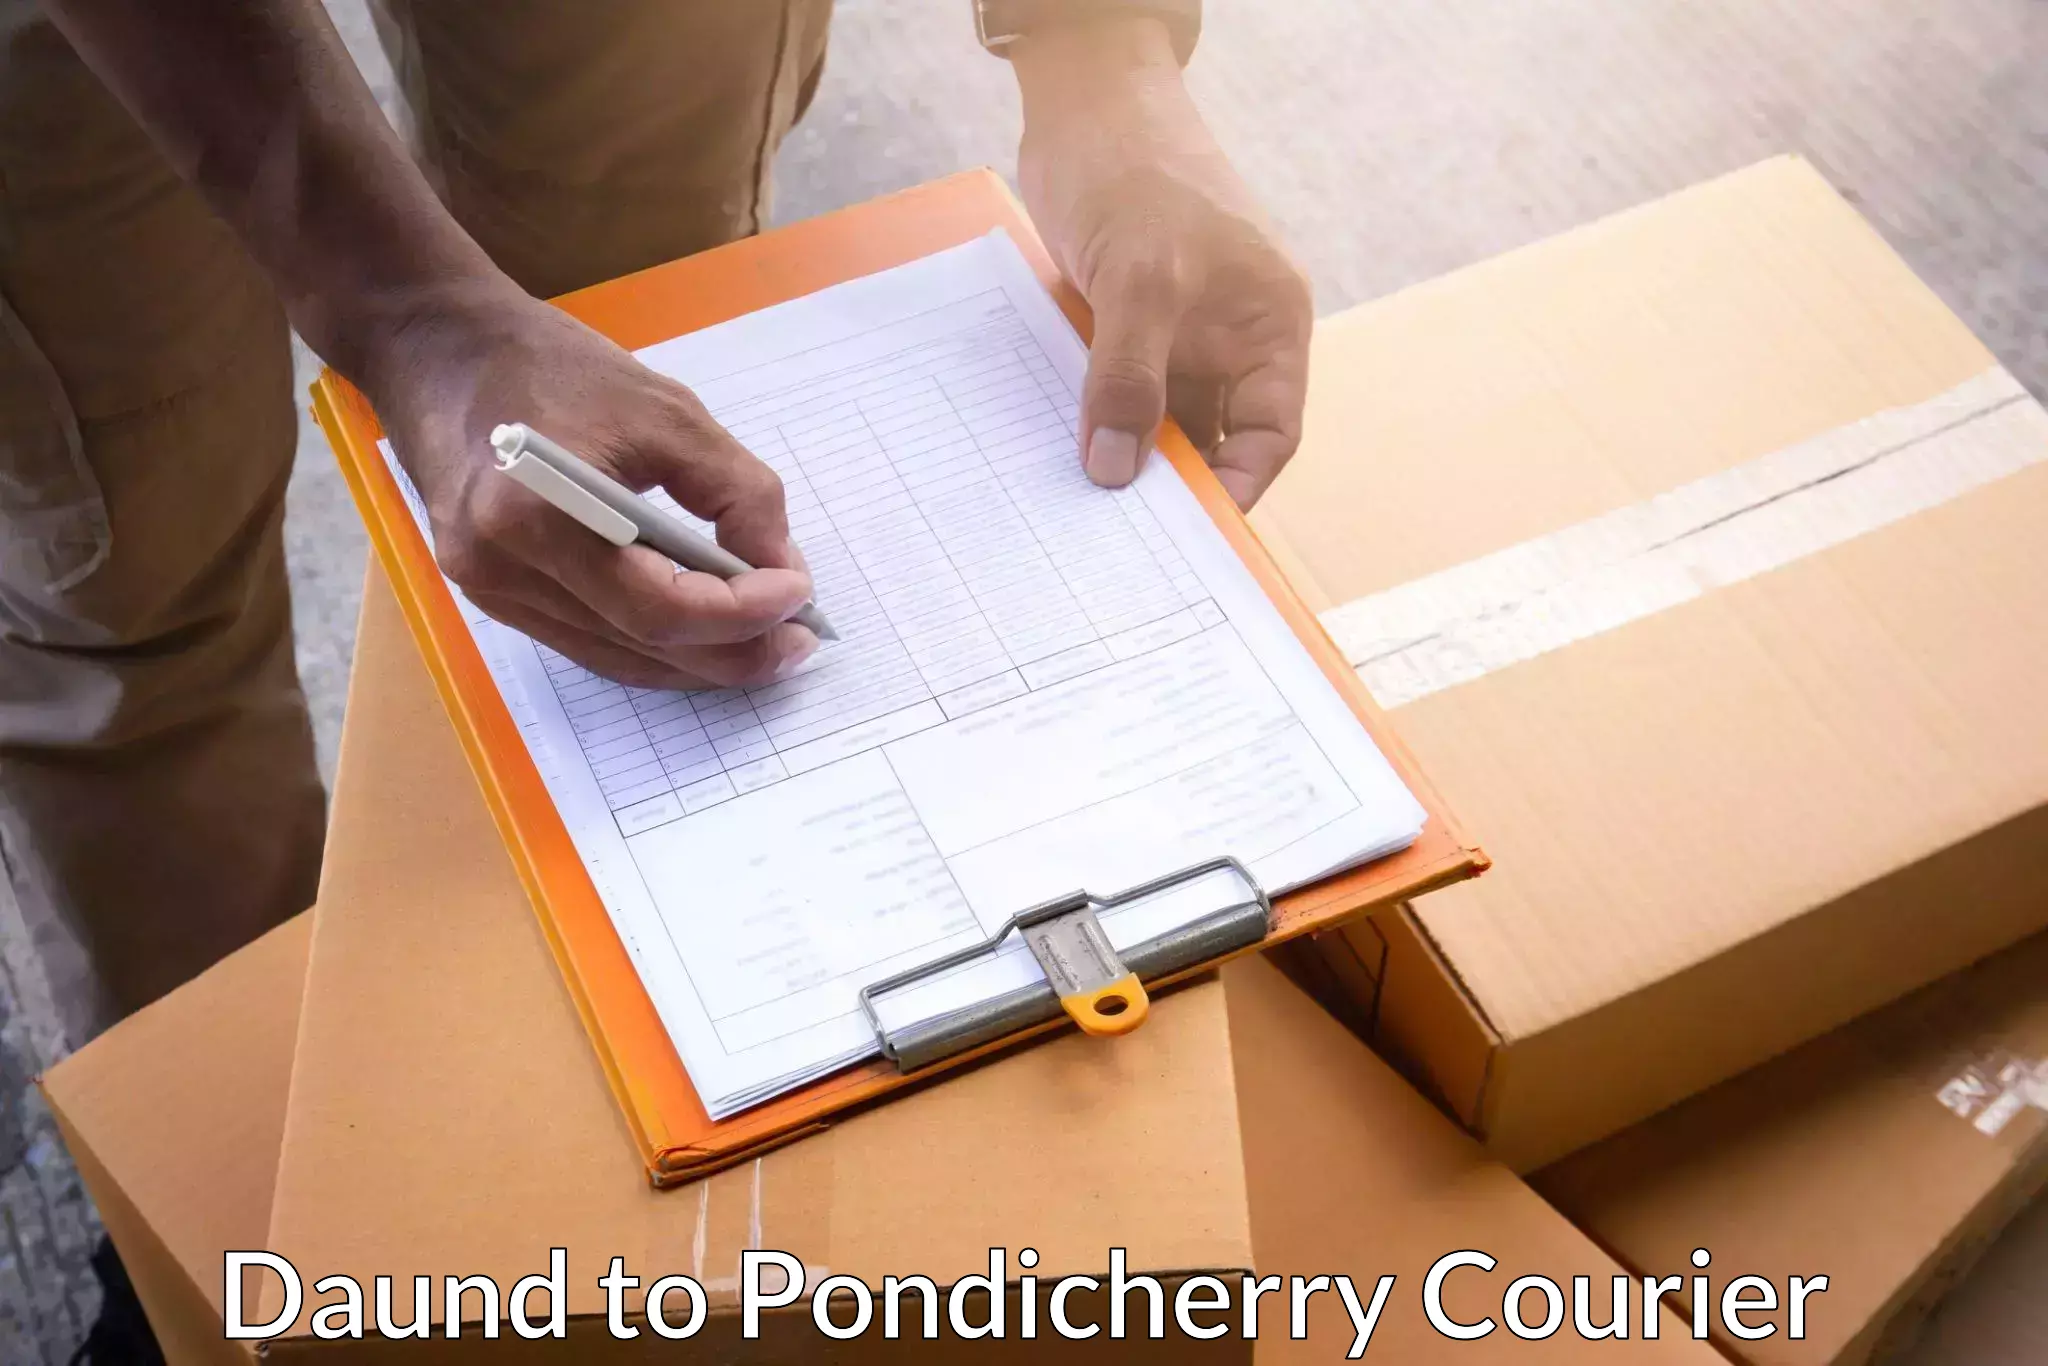 Global logistics network Daund to Pondicherry